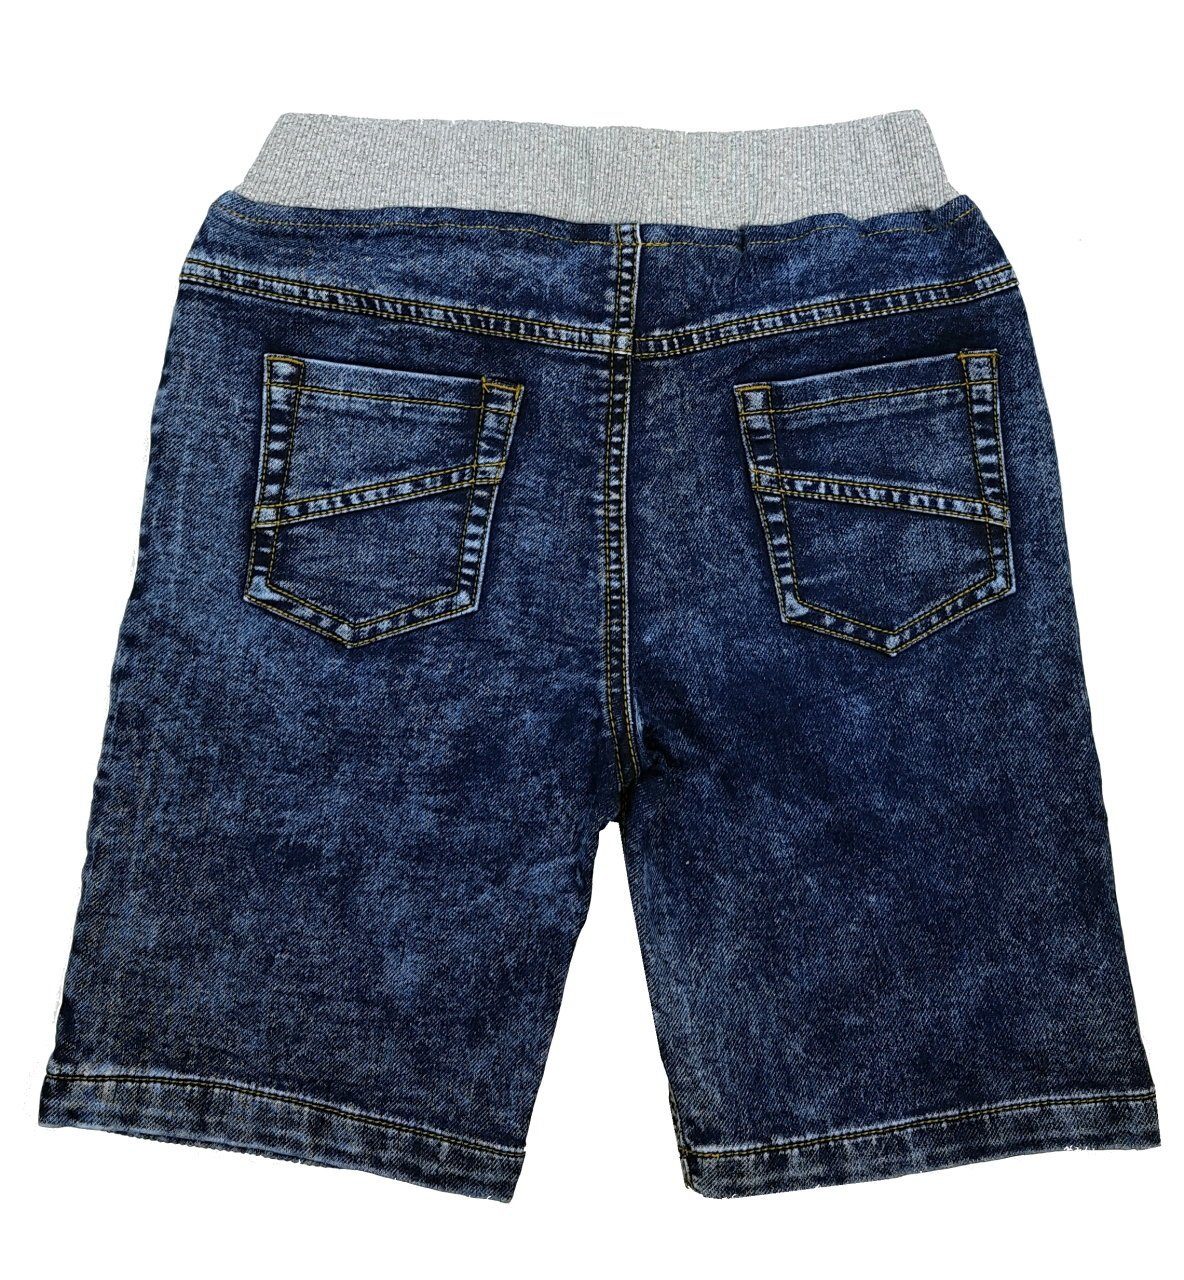 Jogg-Jeansbermudas Hose, Bermuda Stretch Jeans Fashion Sommerhose, Boy Jn206